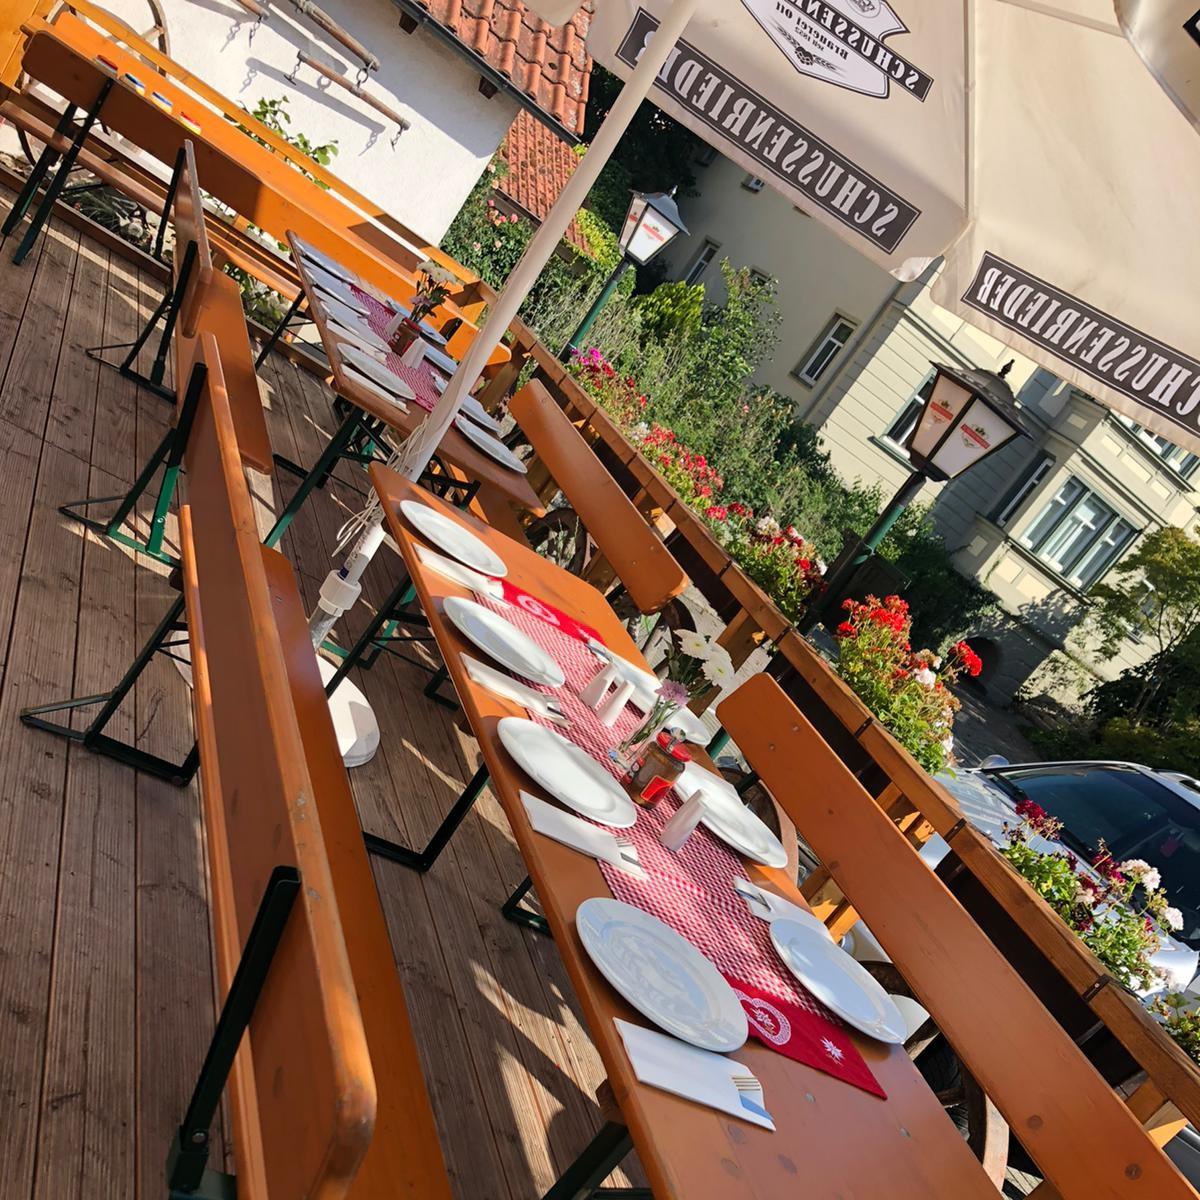 Restaurant "Hotel-Gasthof zum Spitaltor" in Bad Saulgau